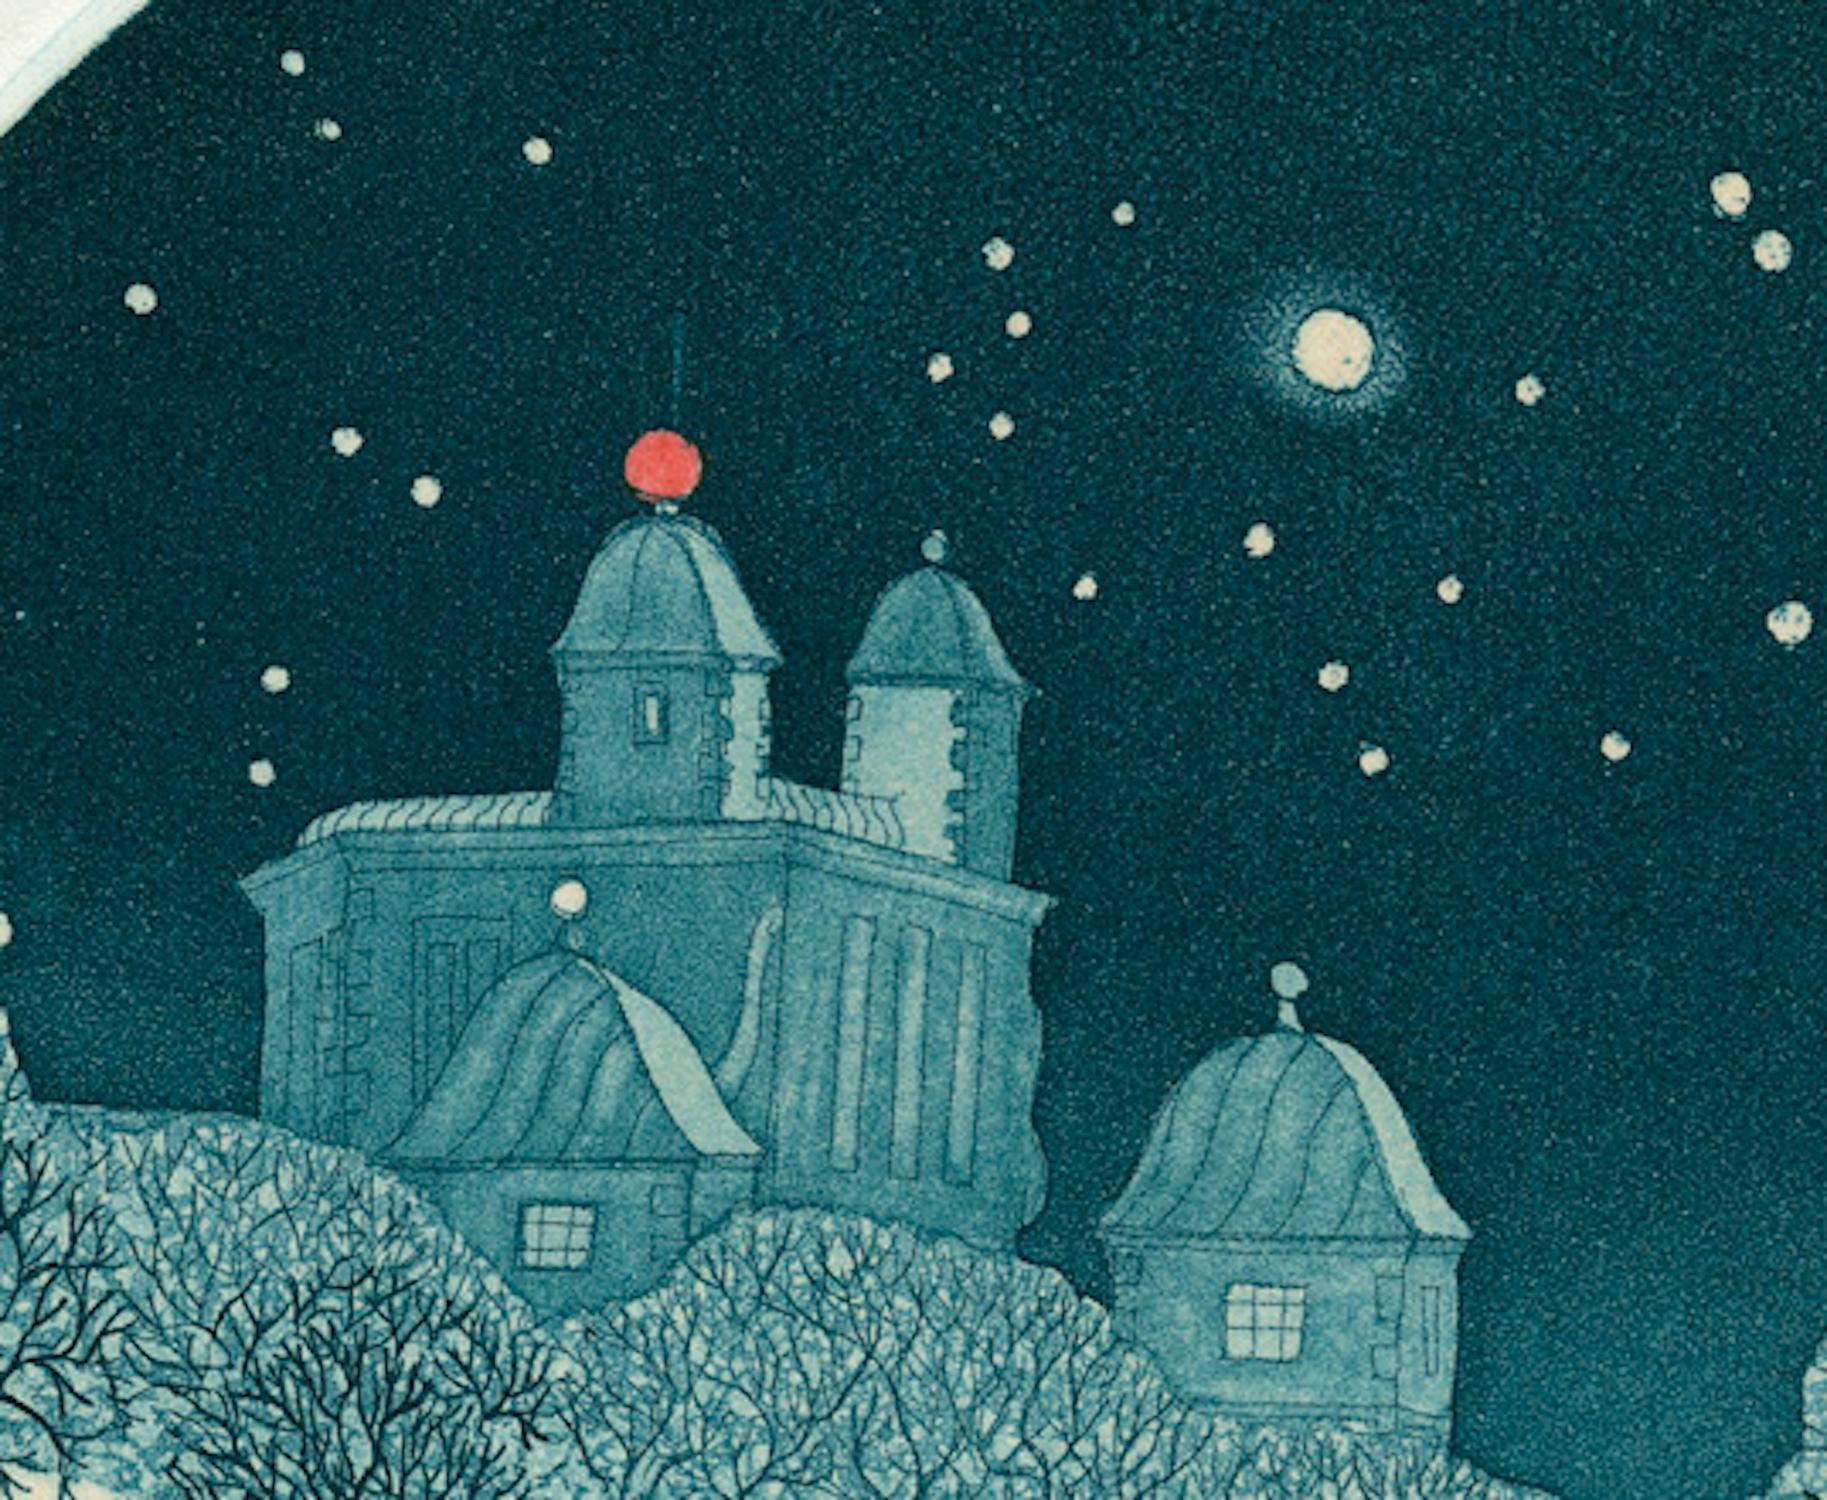 Mitternachts Observatory, Landschaftskunst, Architekturkunst, Londoner Kunst (Blau), Interior Print, von Elaine Marshall